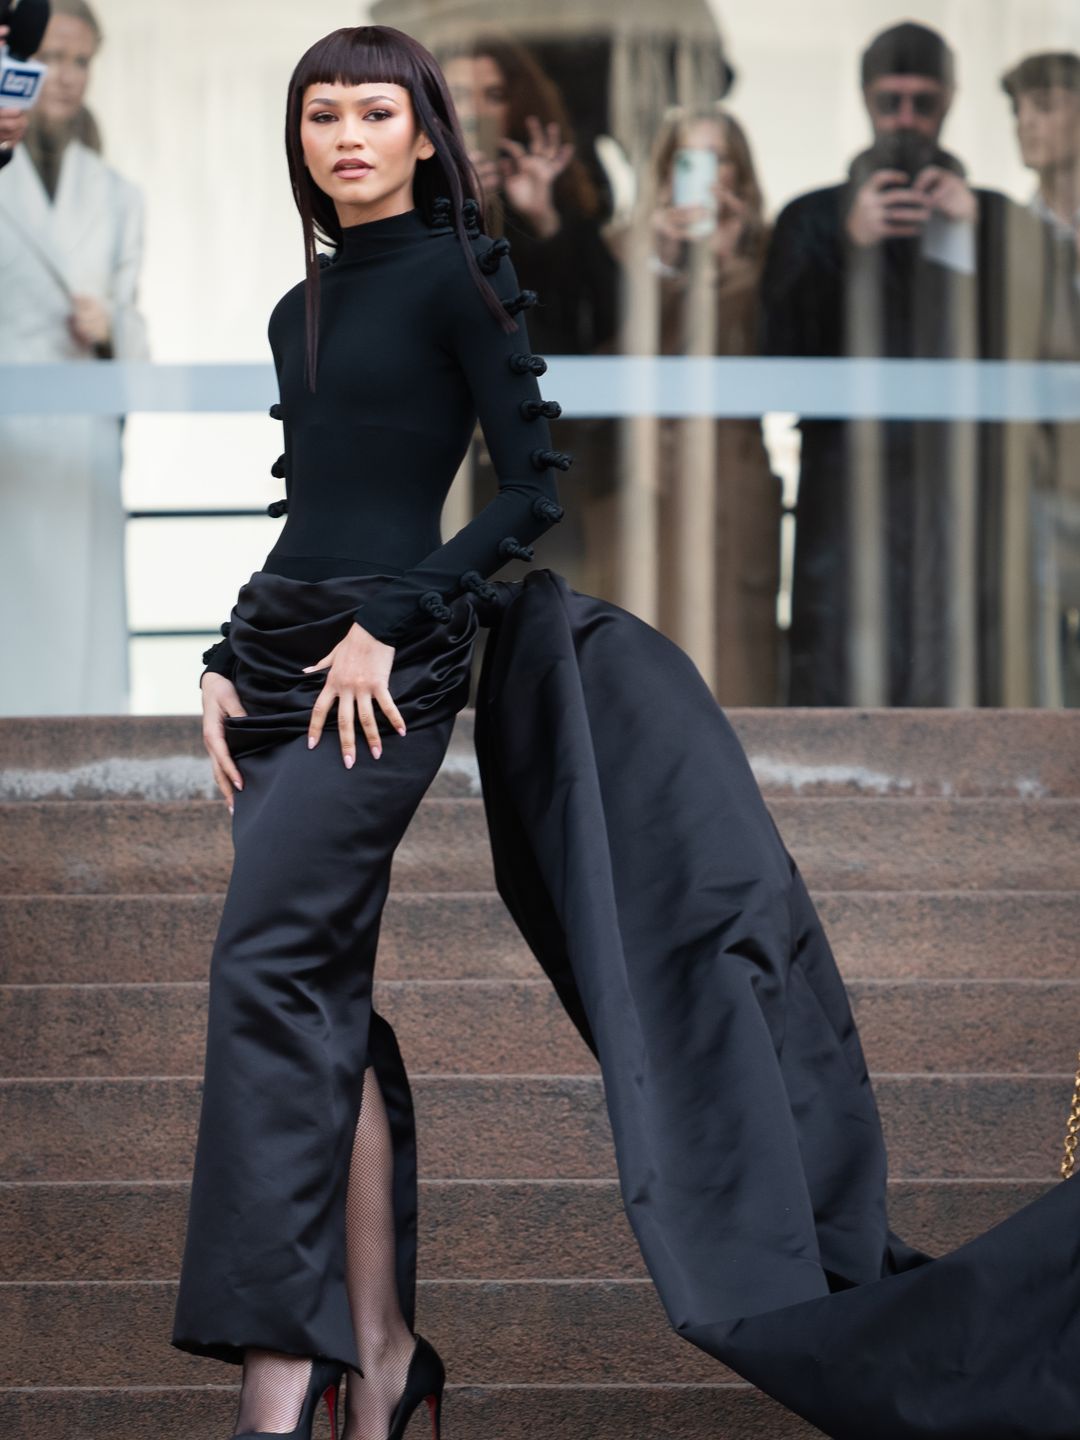 Zendaya just wore £4 calf-high fishnets to Paris Fashion Week | HELLO!